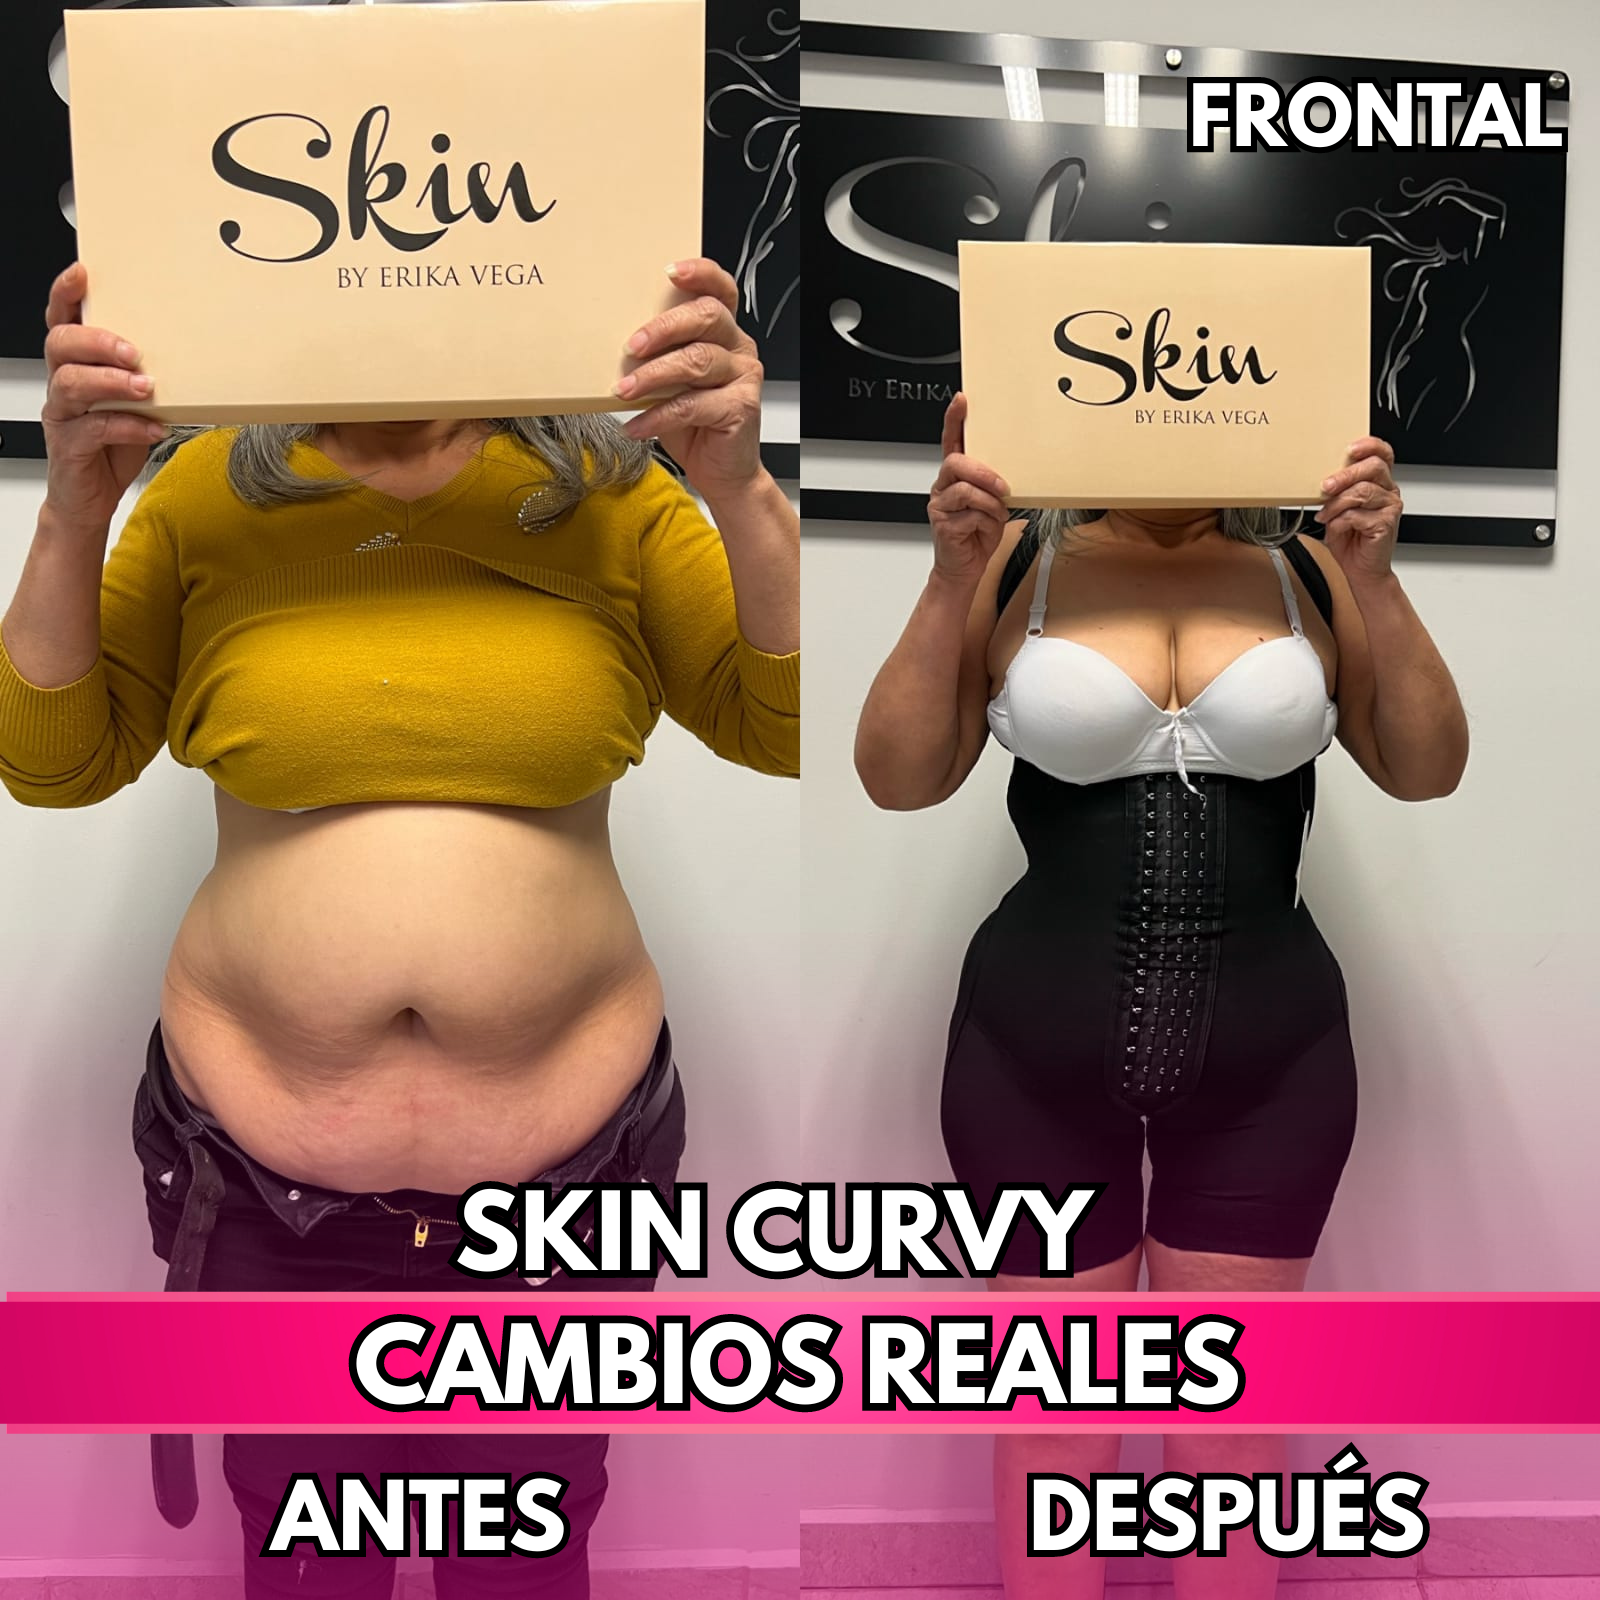 Skin by Erika Vega Company - Skin es sensualidad, seguridad y